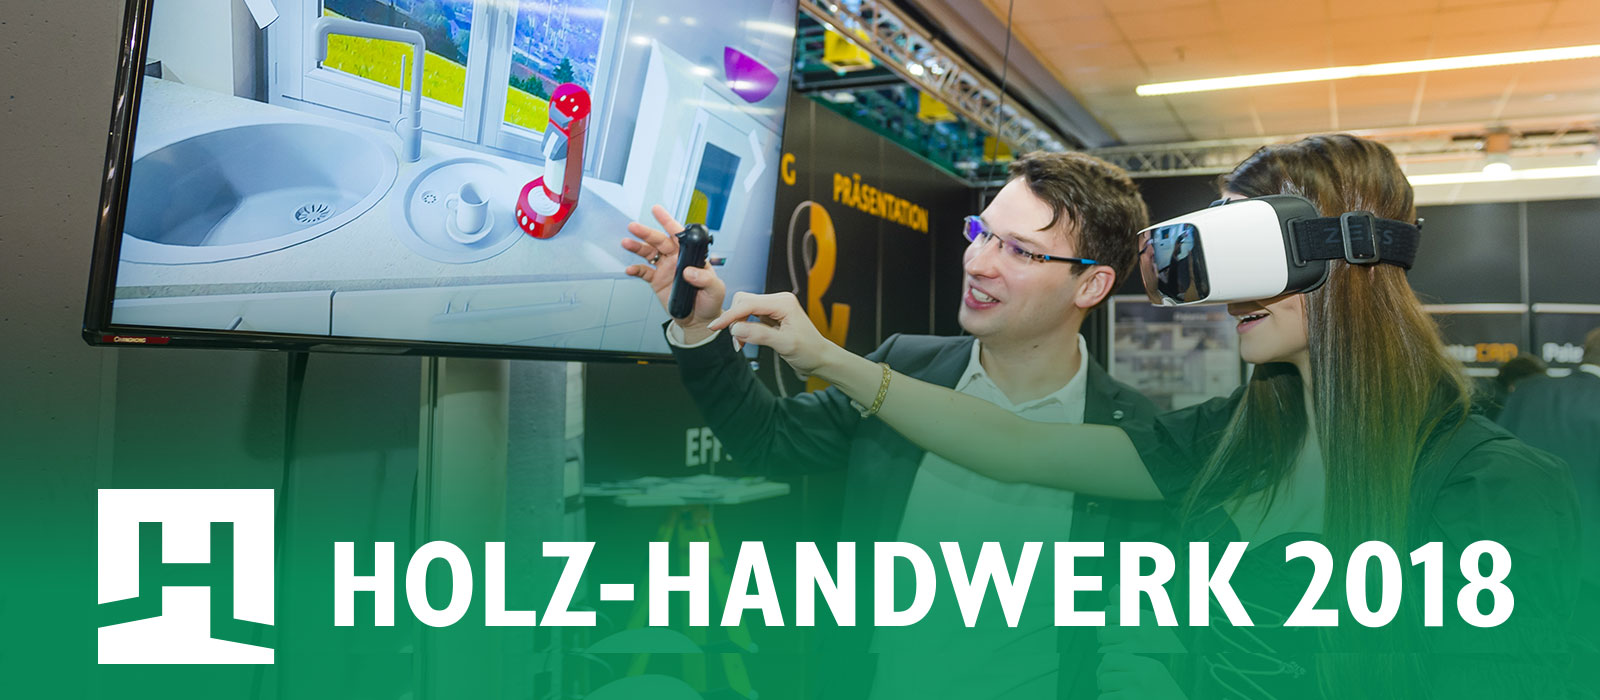 Wirutex hi-tech tools at HOLZ-HANDWERK 2018